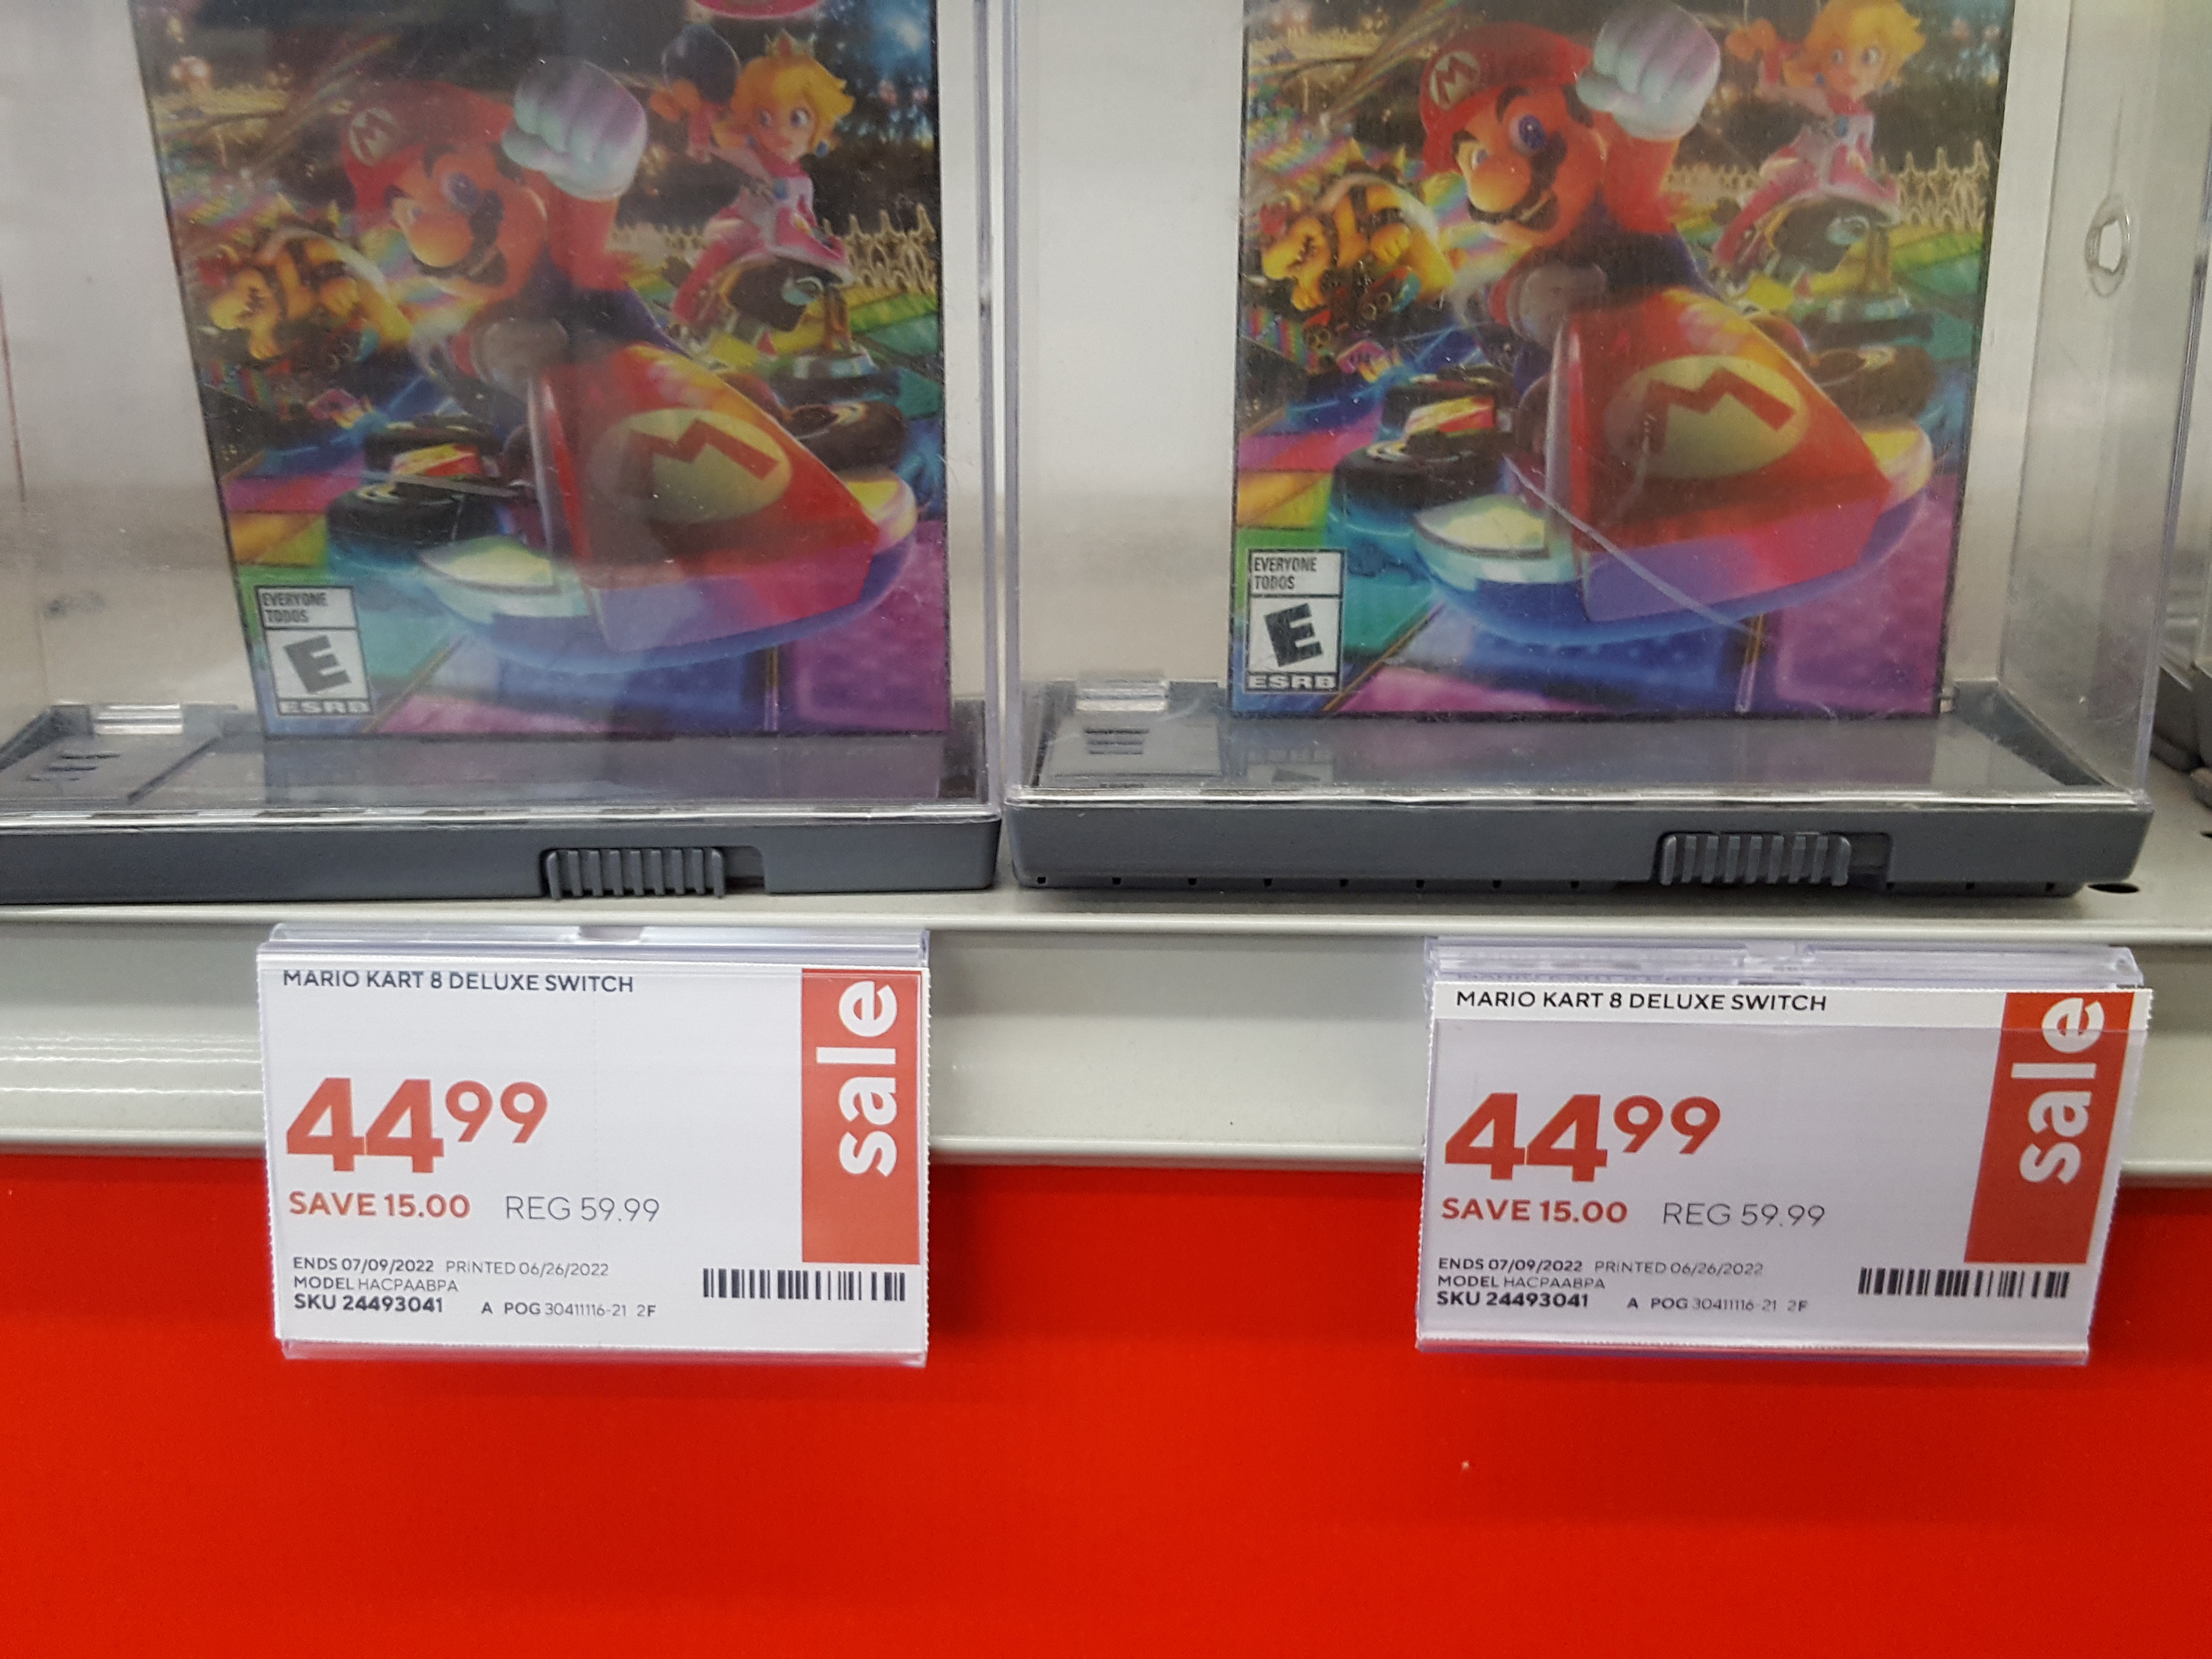 Mario Kart 8 Deluxe (Nintendo Switch) - $44.99 @ Staples B&M (YMMV)